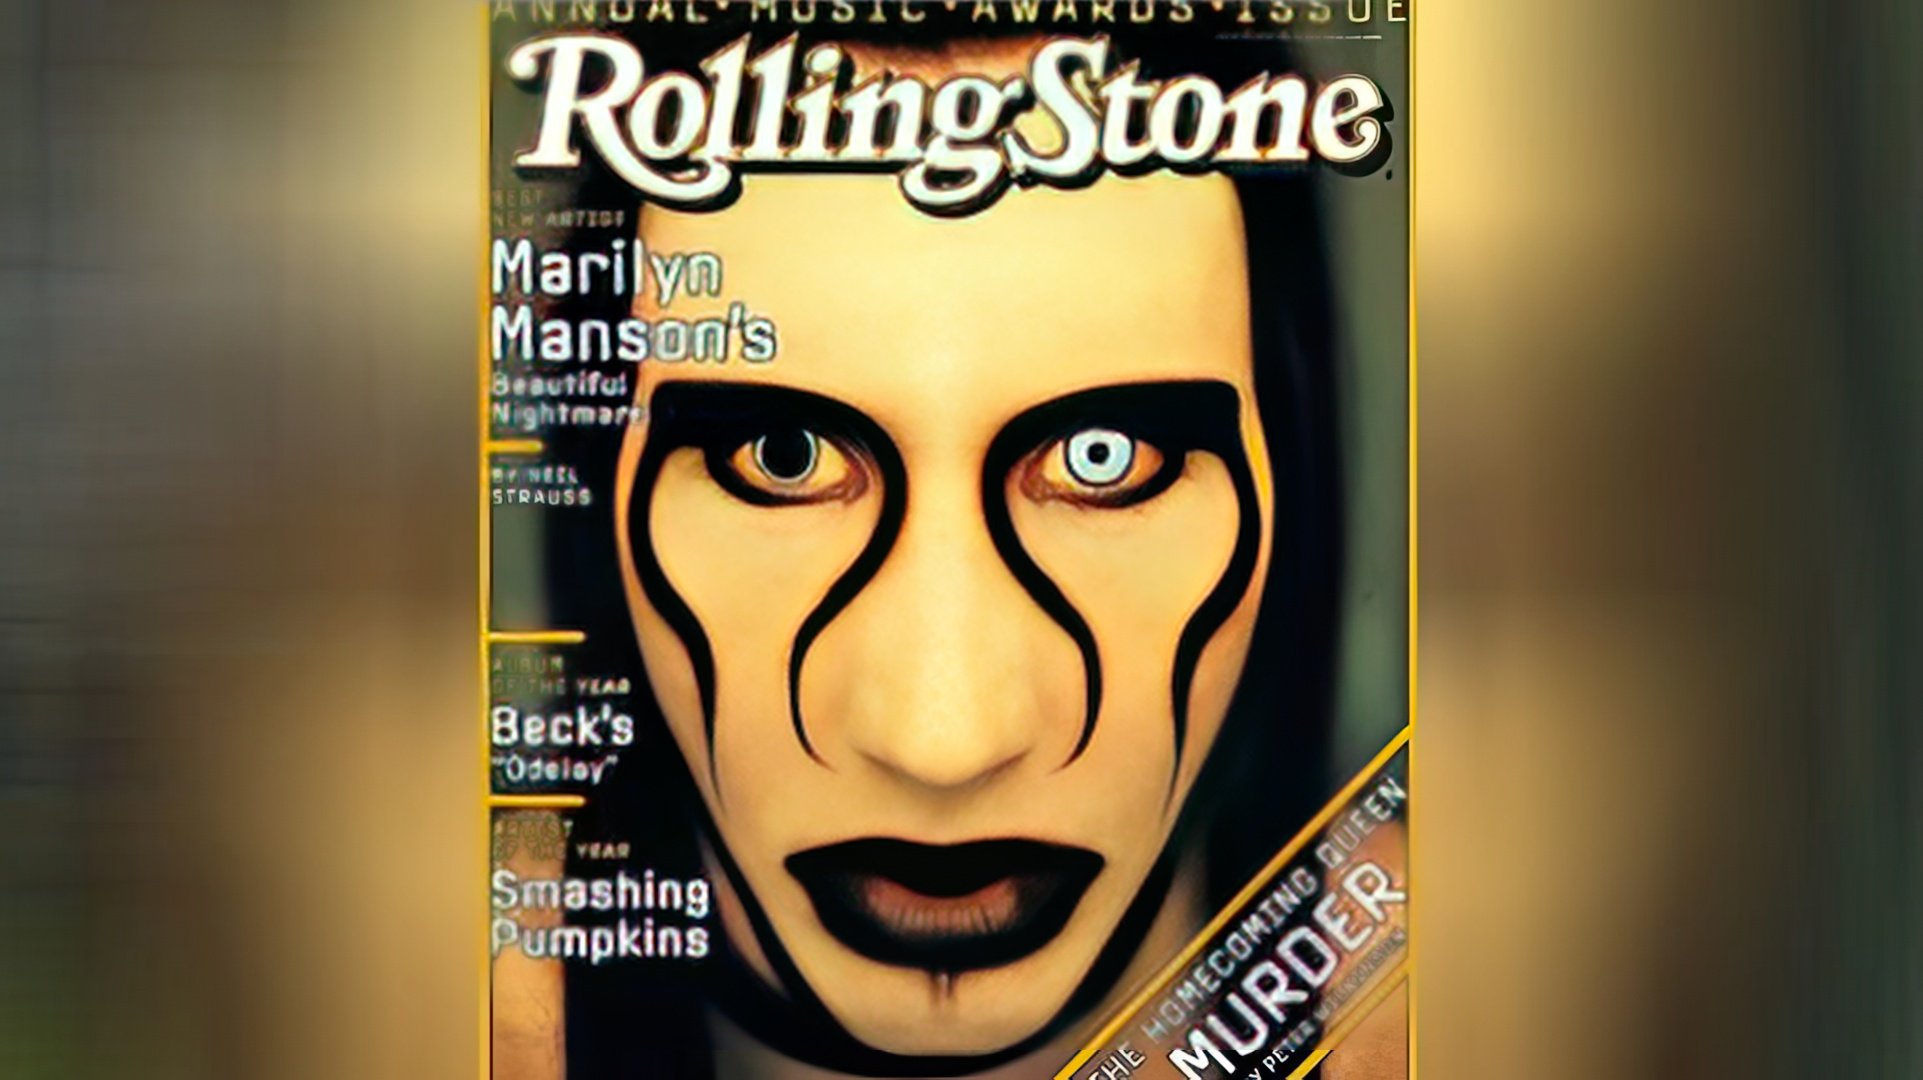 1997: Marilyn Manson – artist of the year